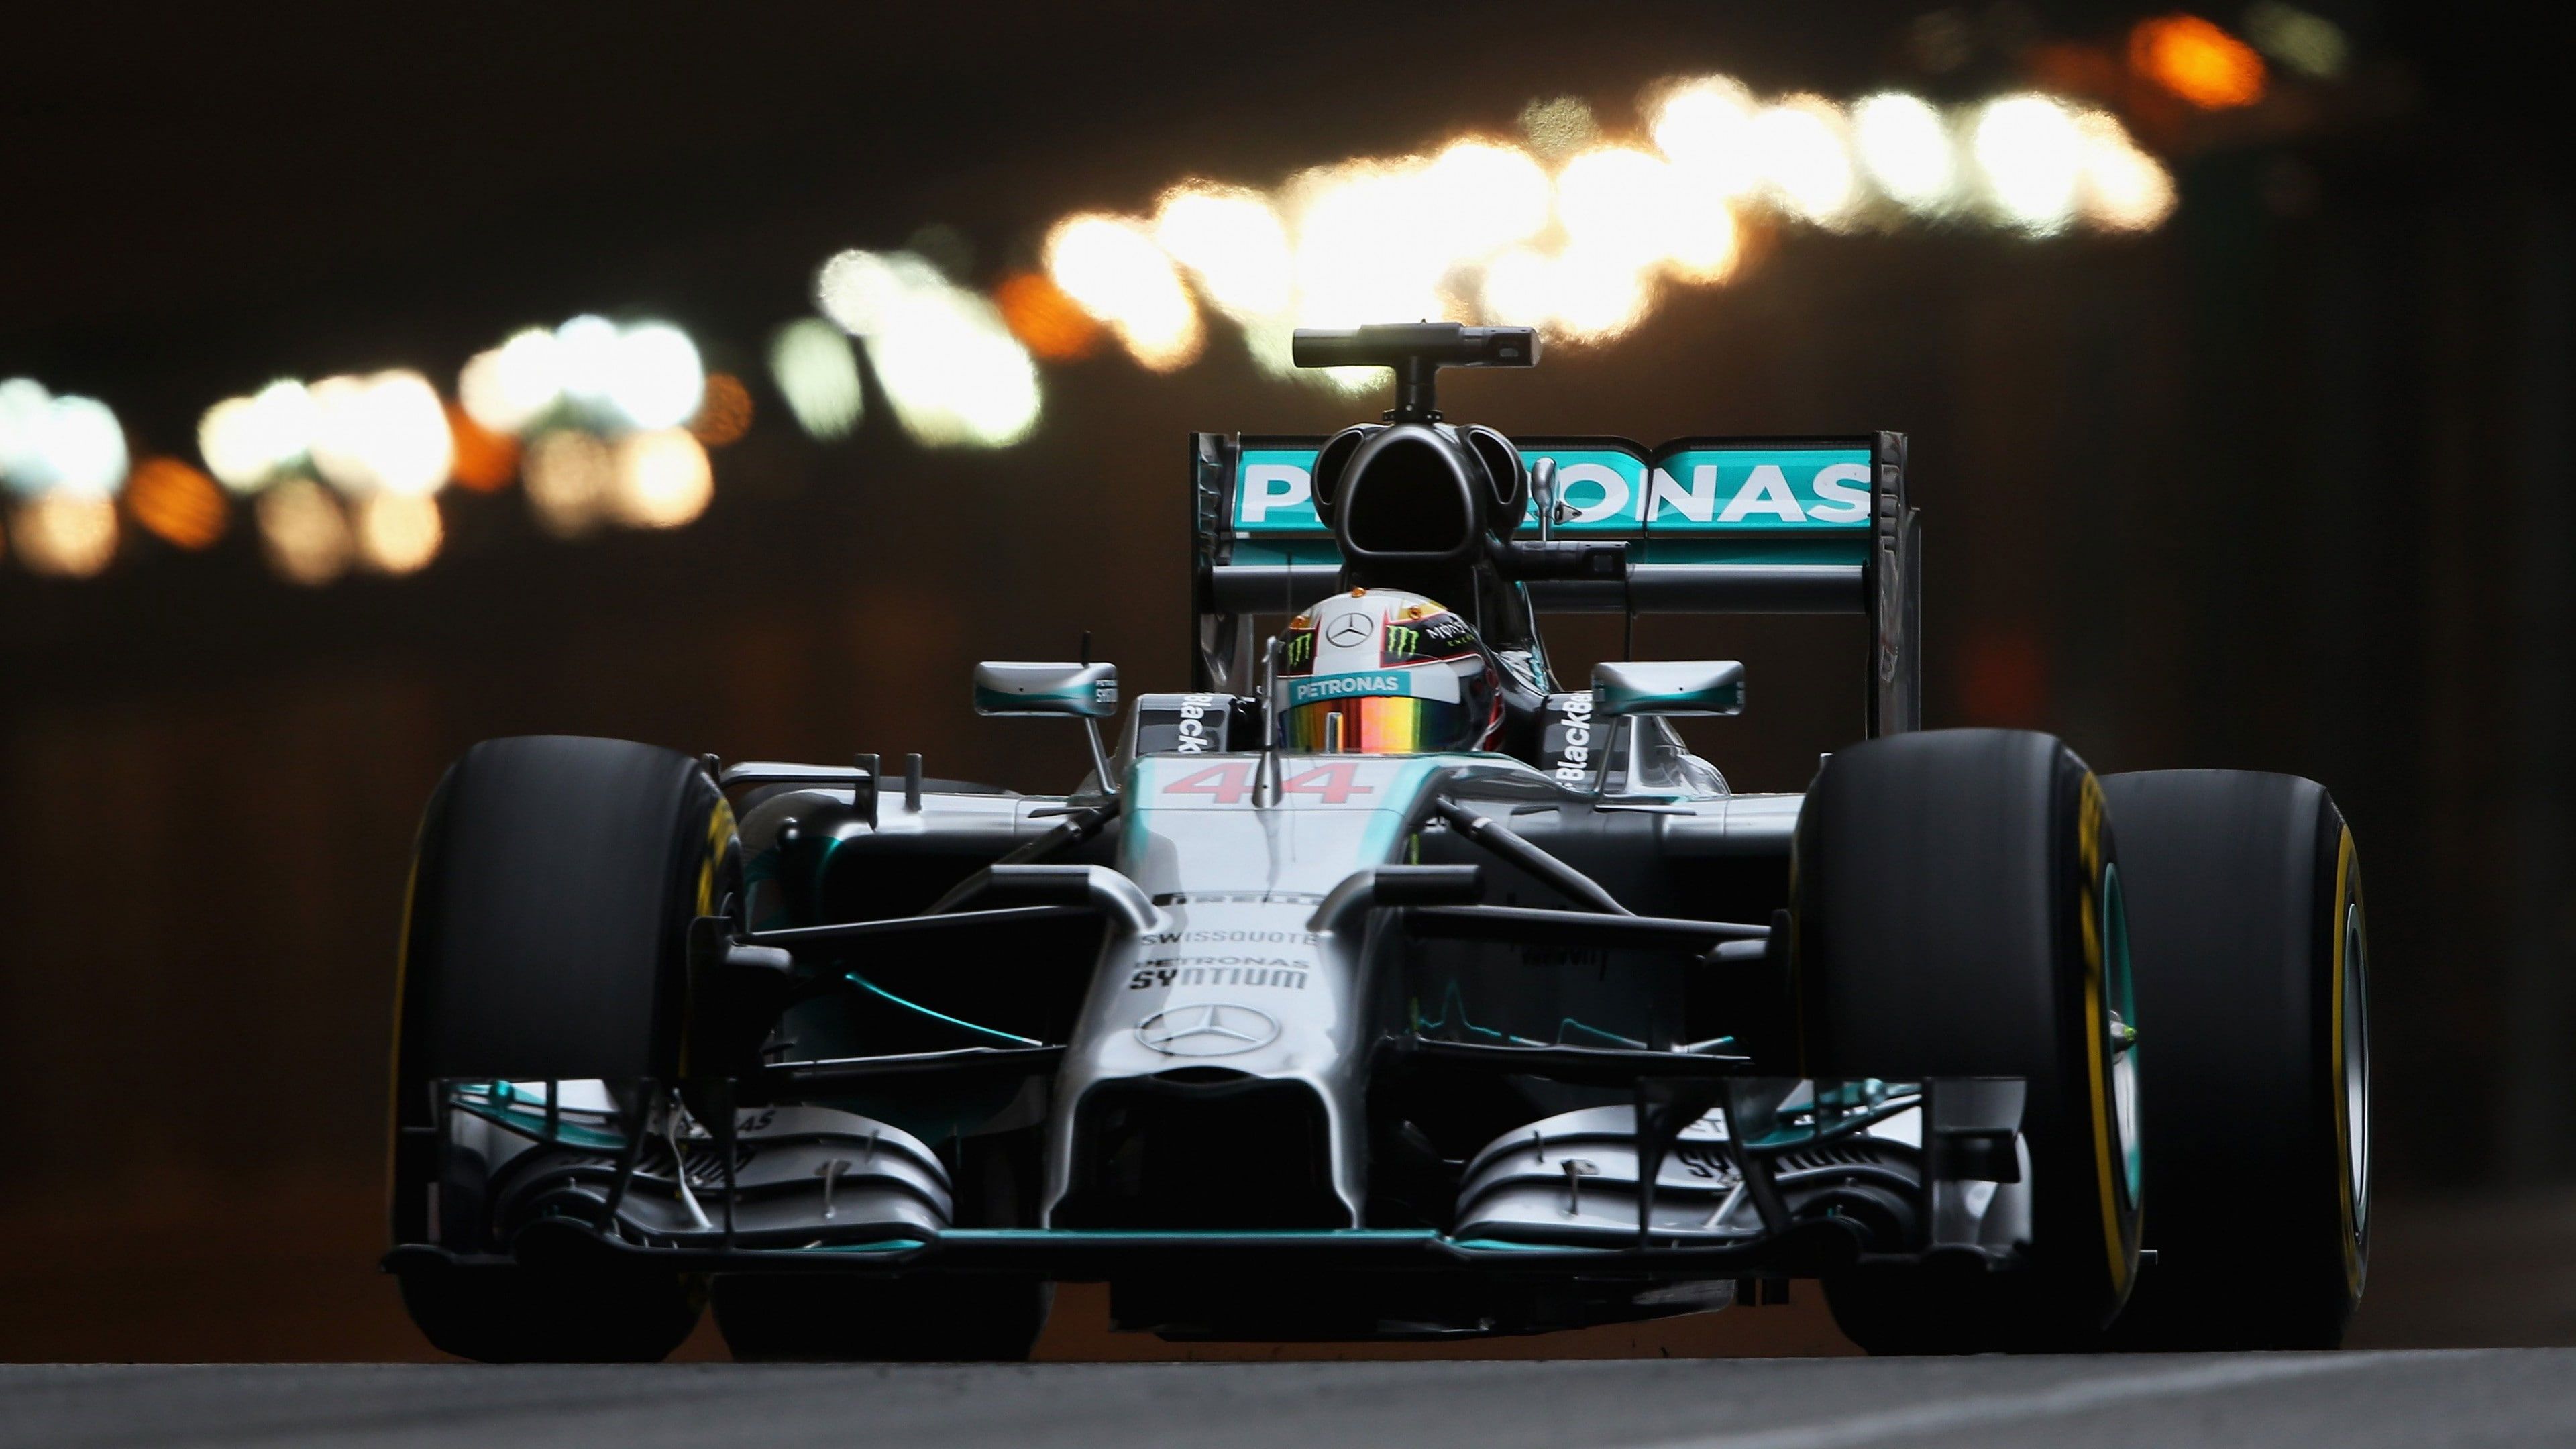 Lewis Hamilton has won the Monaco Grand Prix for the second year in a row. - Lewis Hamilton